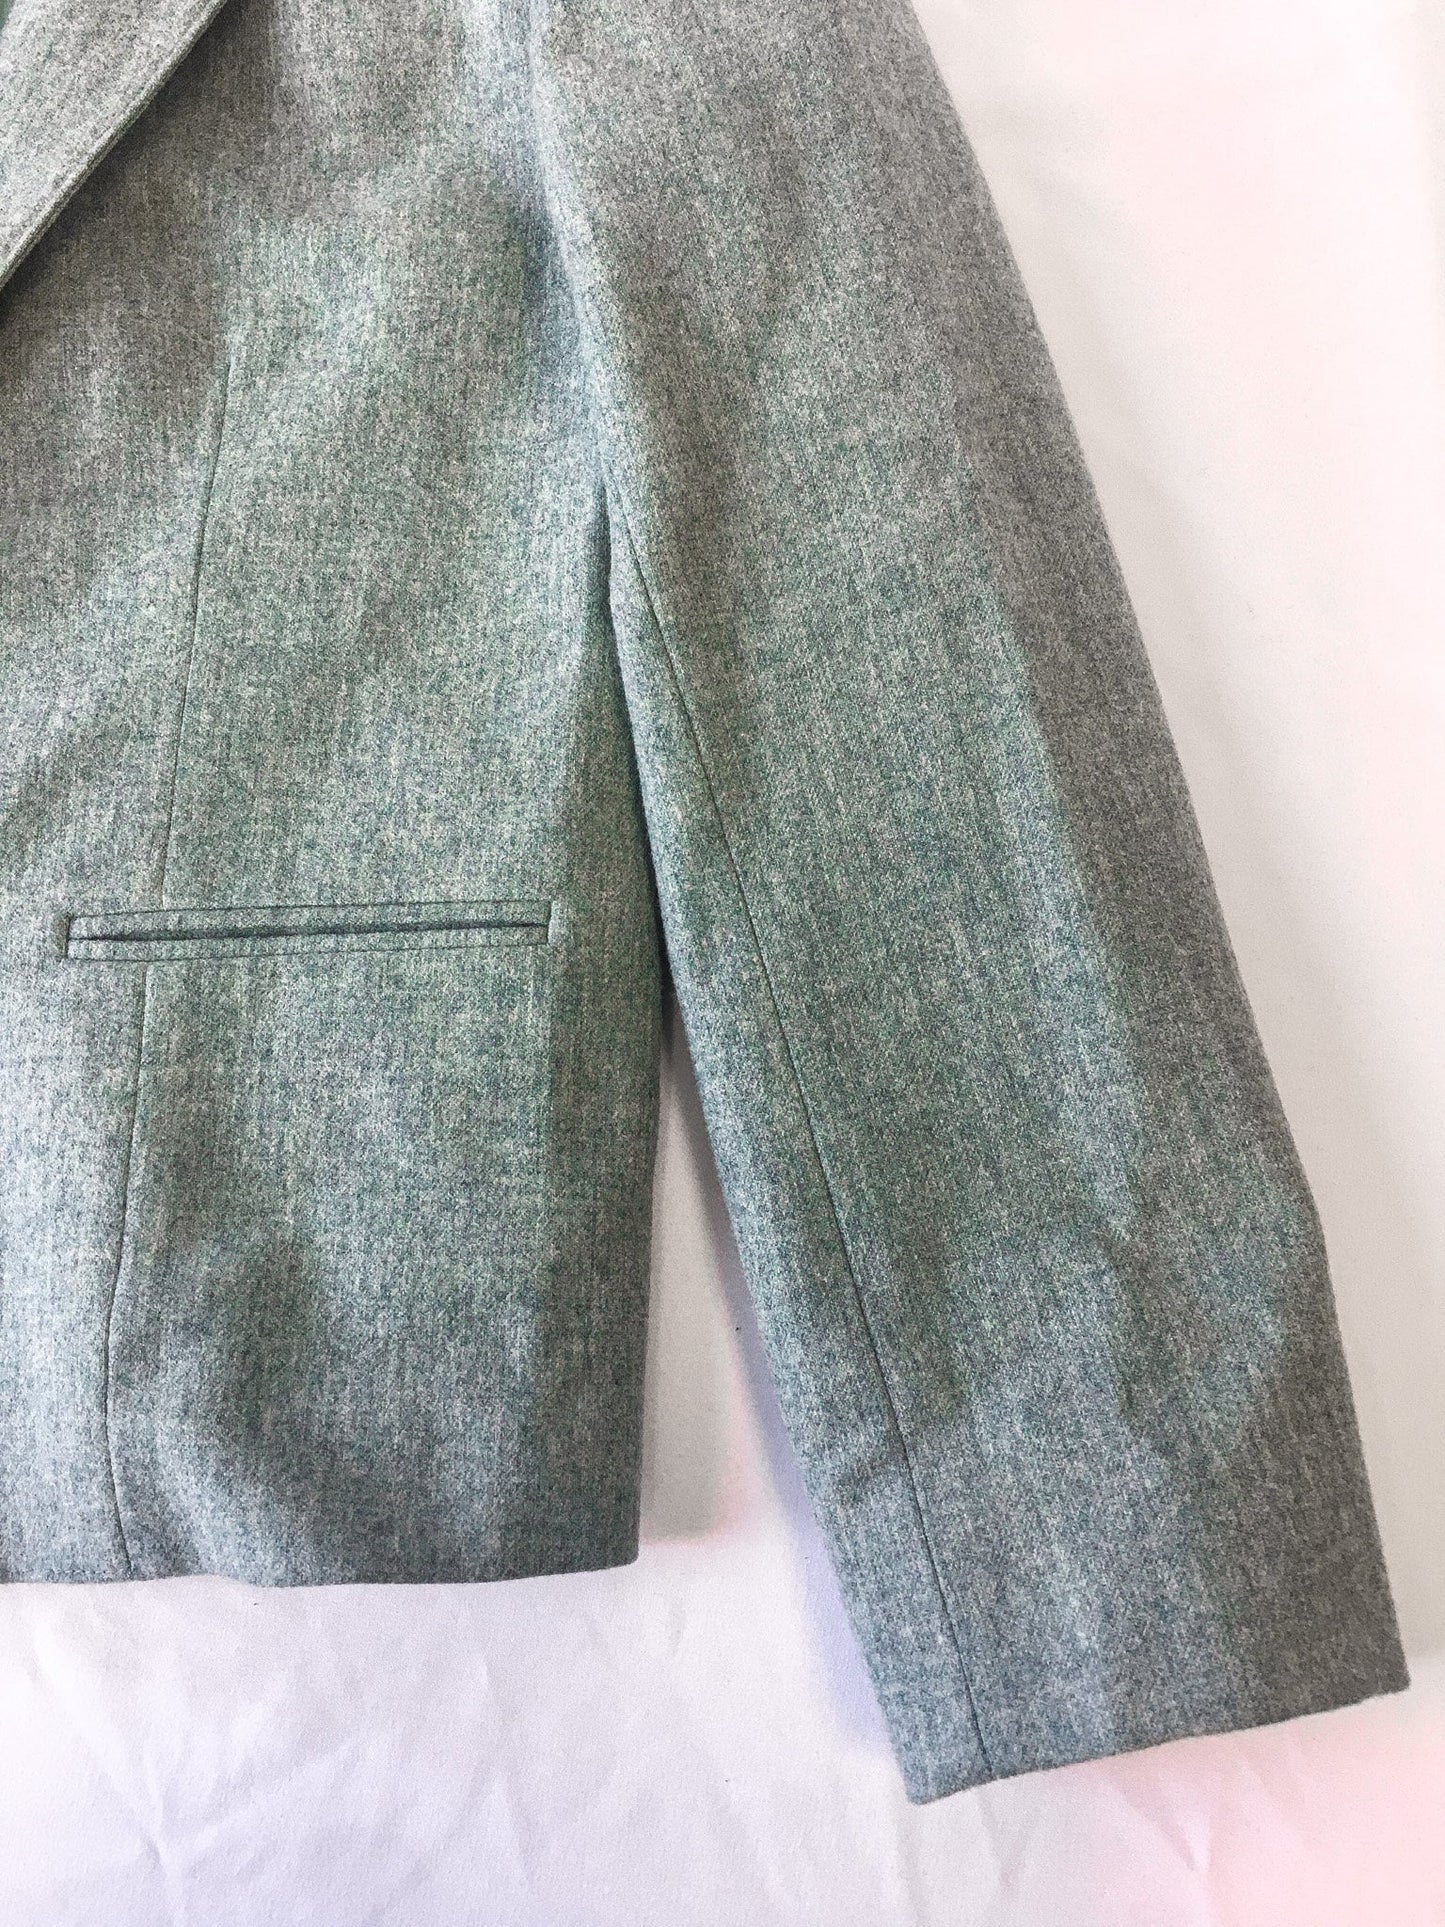 Vintage 90s Pendleton Pastel Blue/Green Wool Blazer, Vintage Sz. 12, 100% Pure Wool Blazer